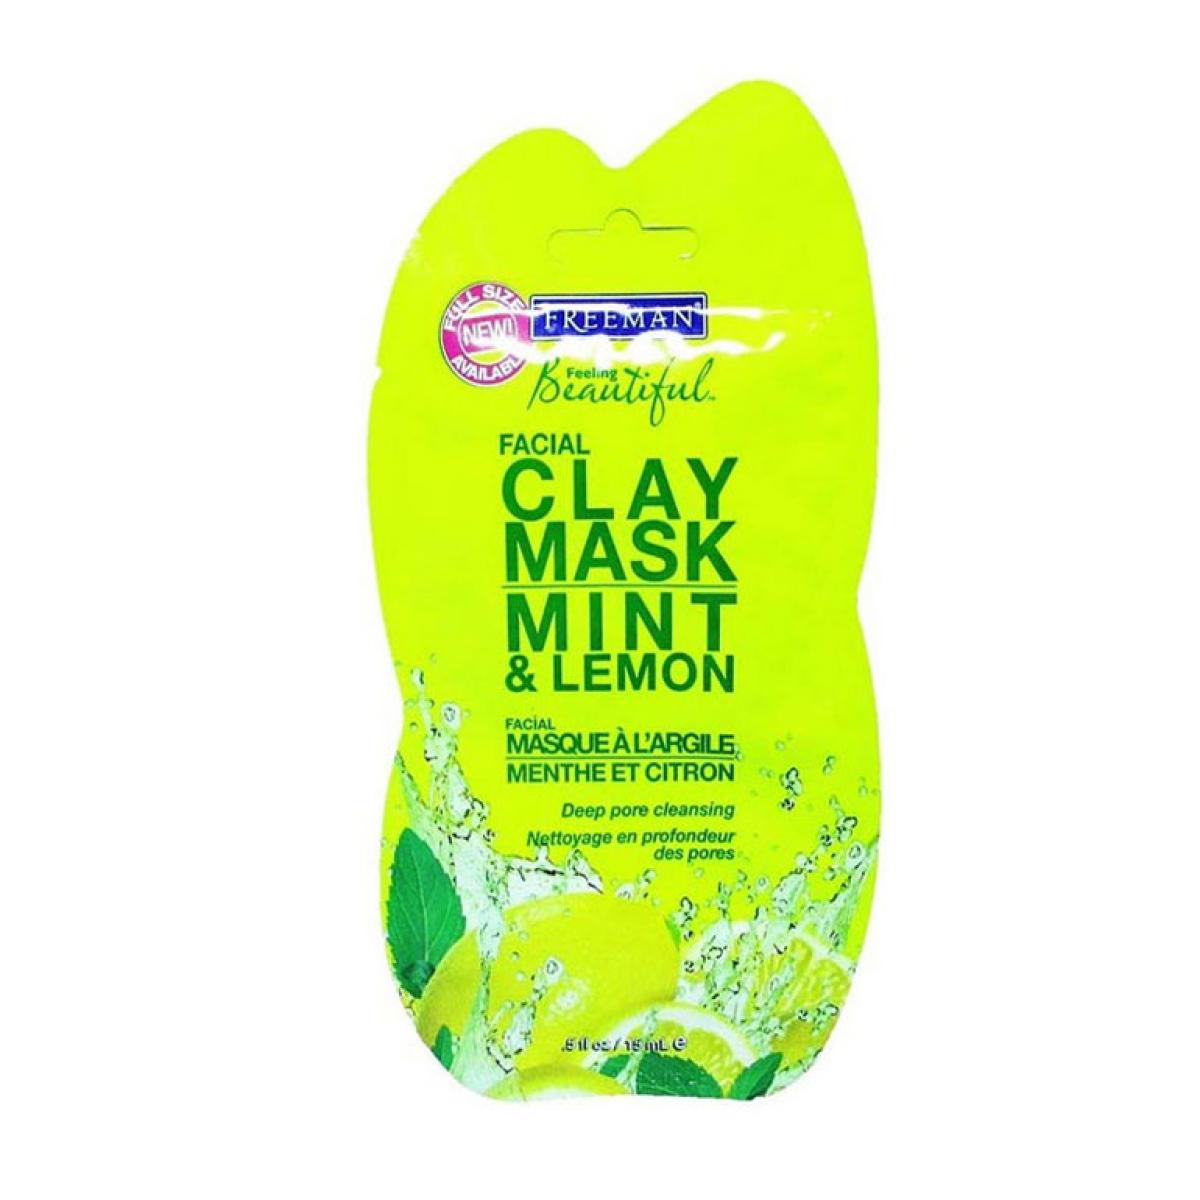 ماسک مسافرتی نعناع و لیمو - mint and lemon clay mask small